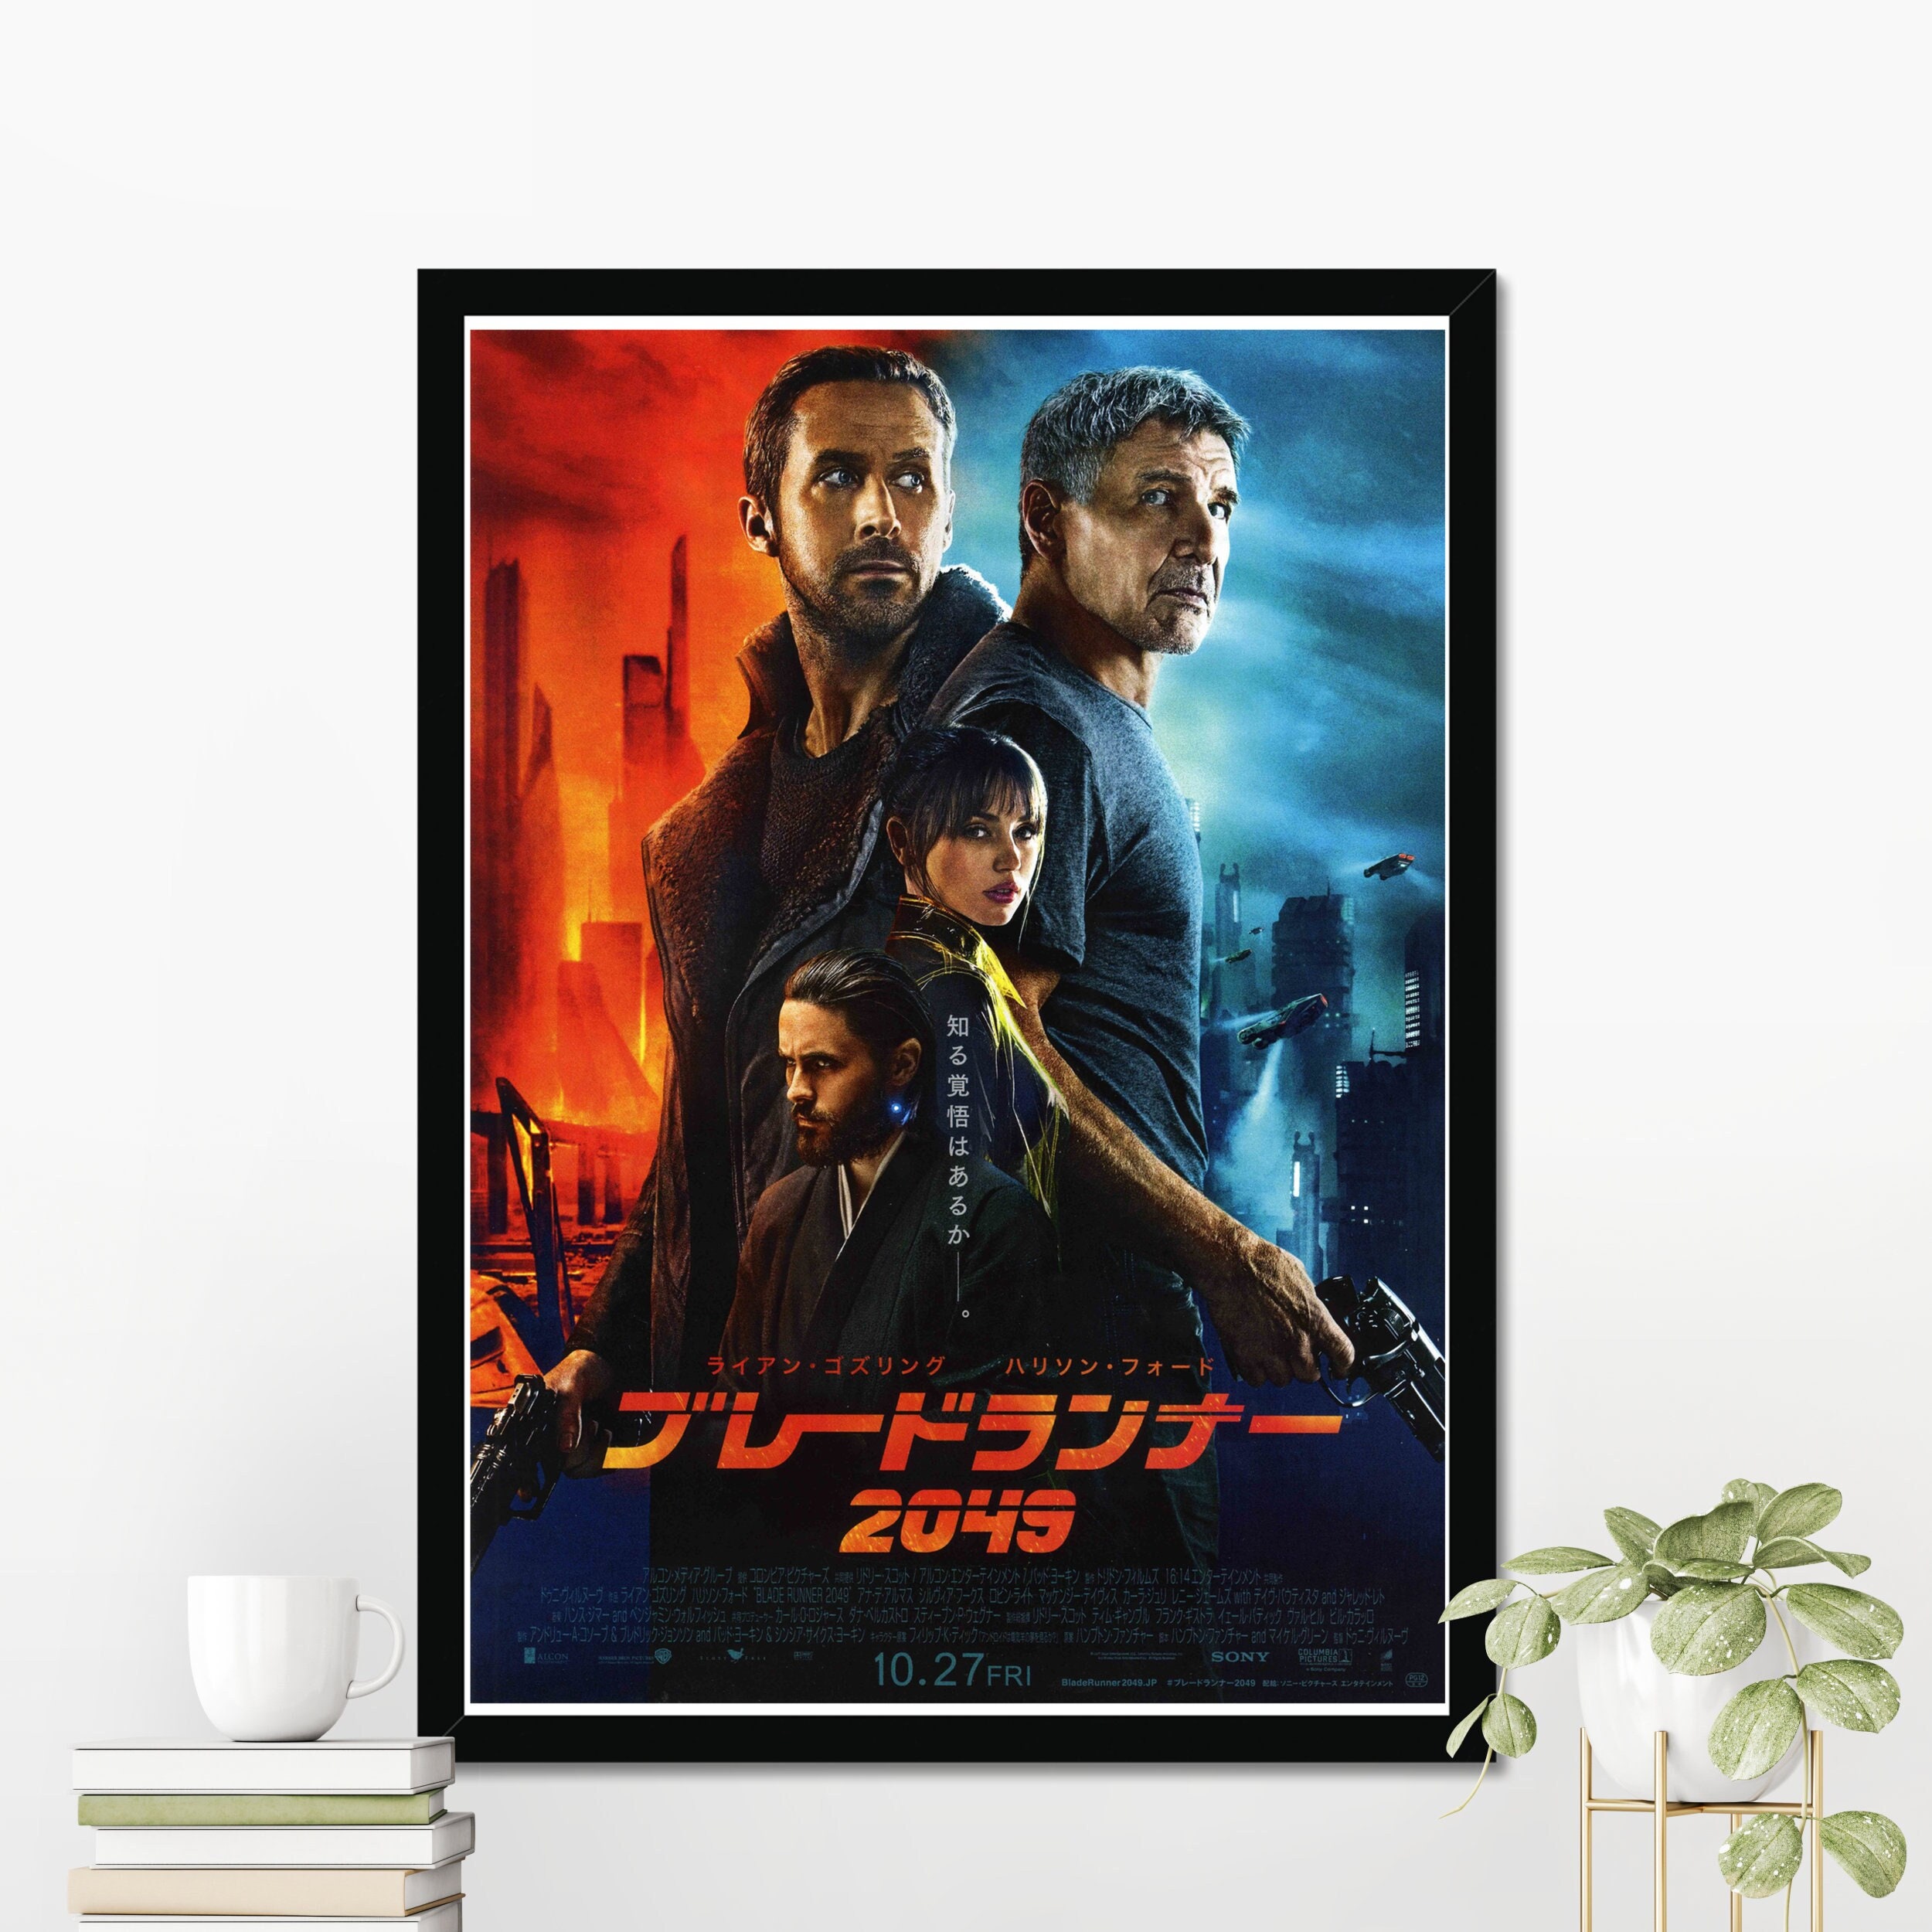 Japanese Blade Runner 49 Movie Poster Quality Etsy